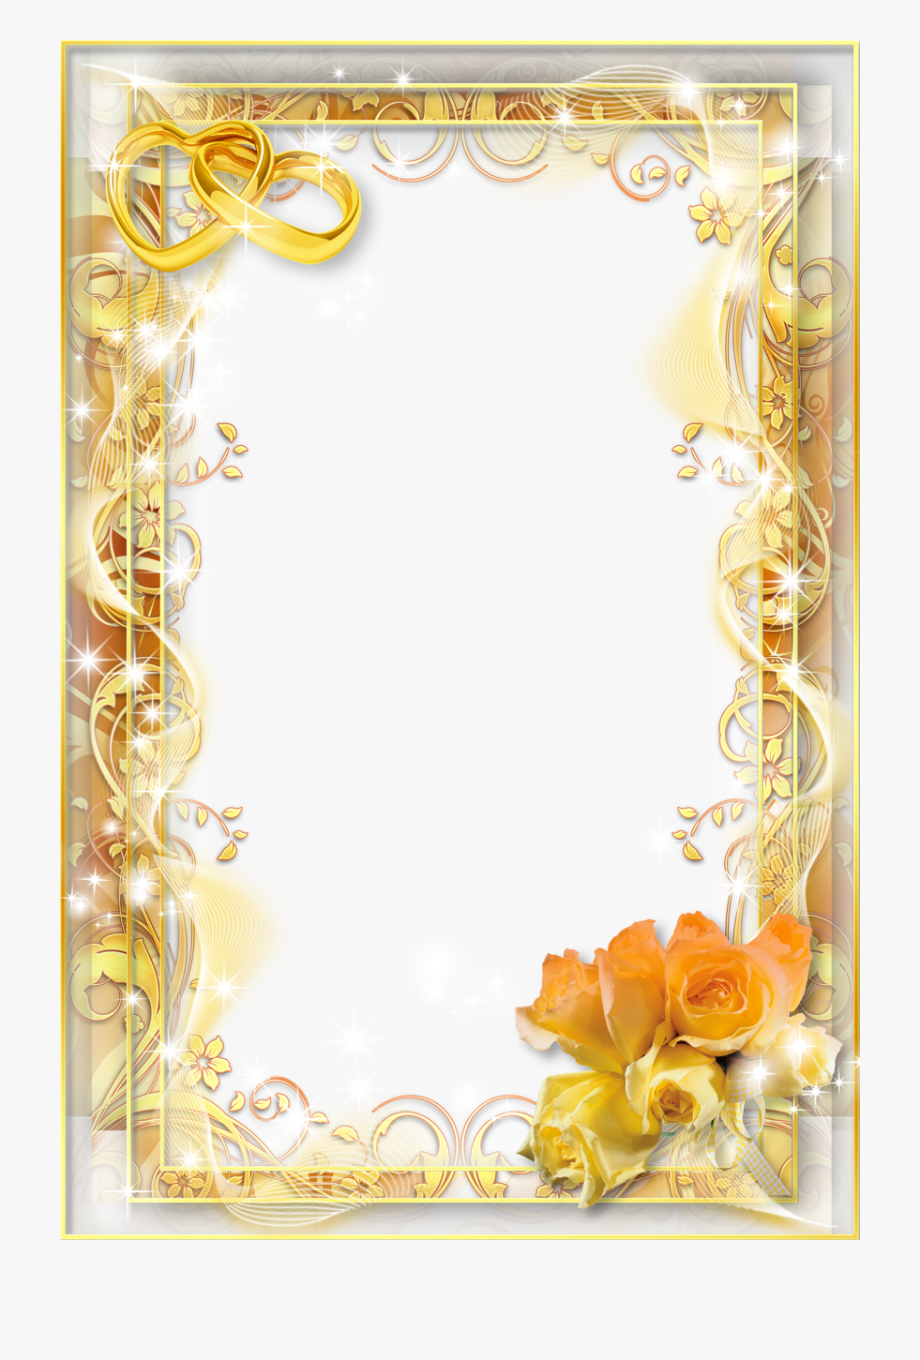 Gold wedding frame.